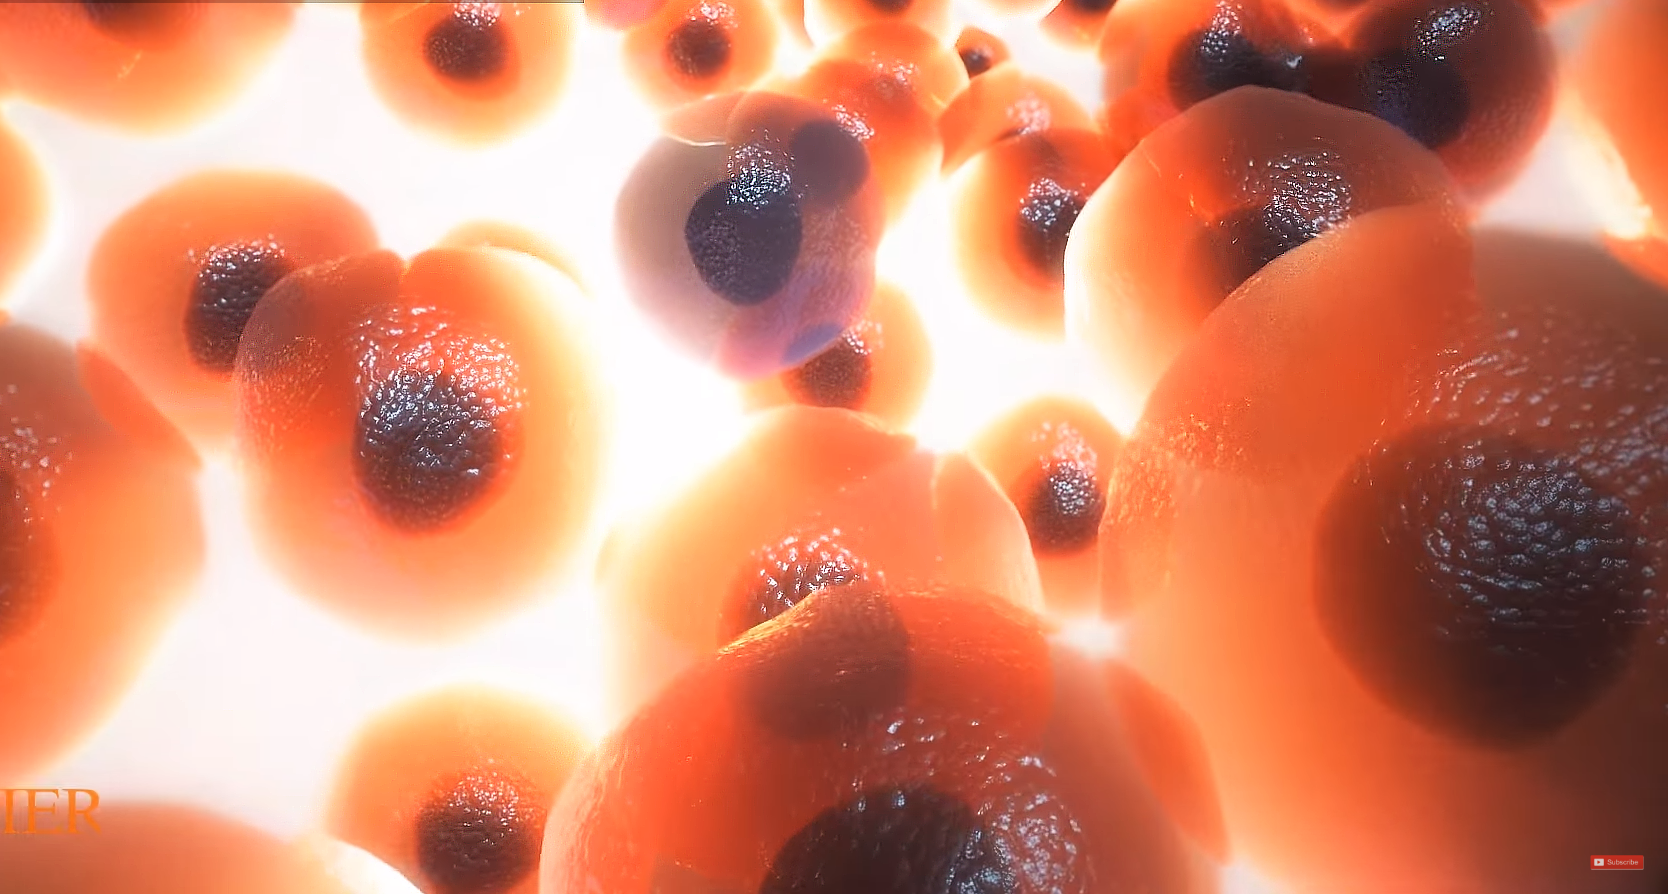 Biological Animation of Cellular Structures